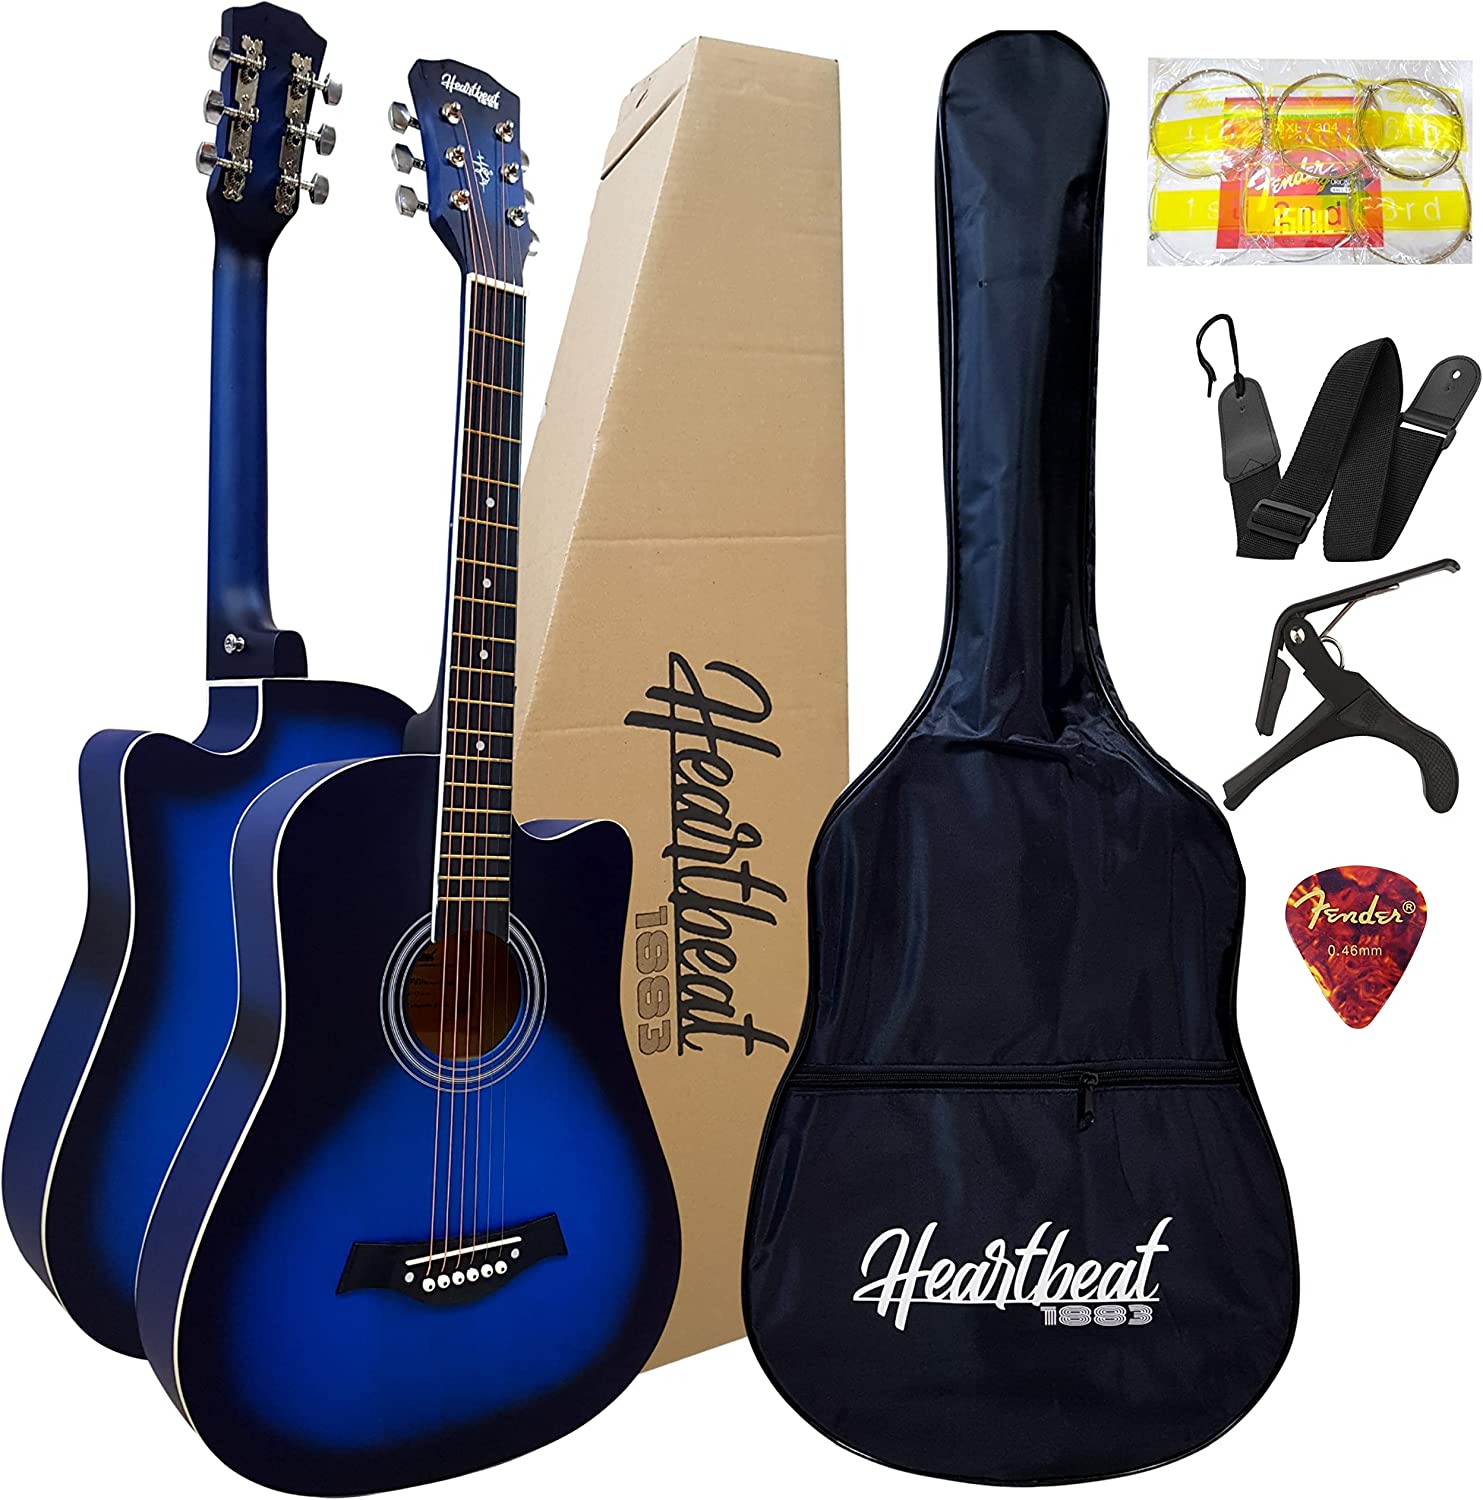 گیتار آکوستیک Heartbeat1883 Acoustic Guitar 38 With Bag - ارسال ۱۰ الی ۱۵ روز کاری